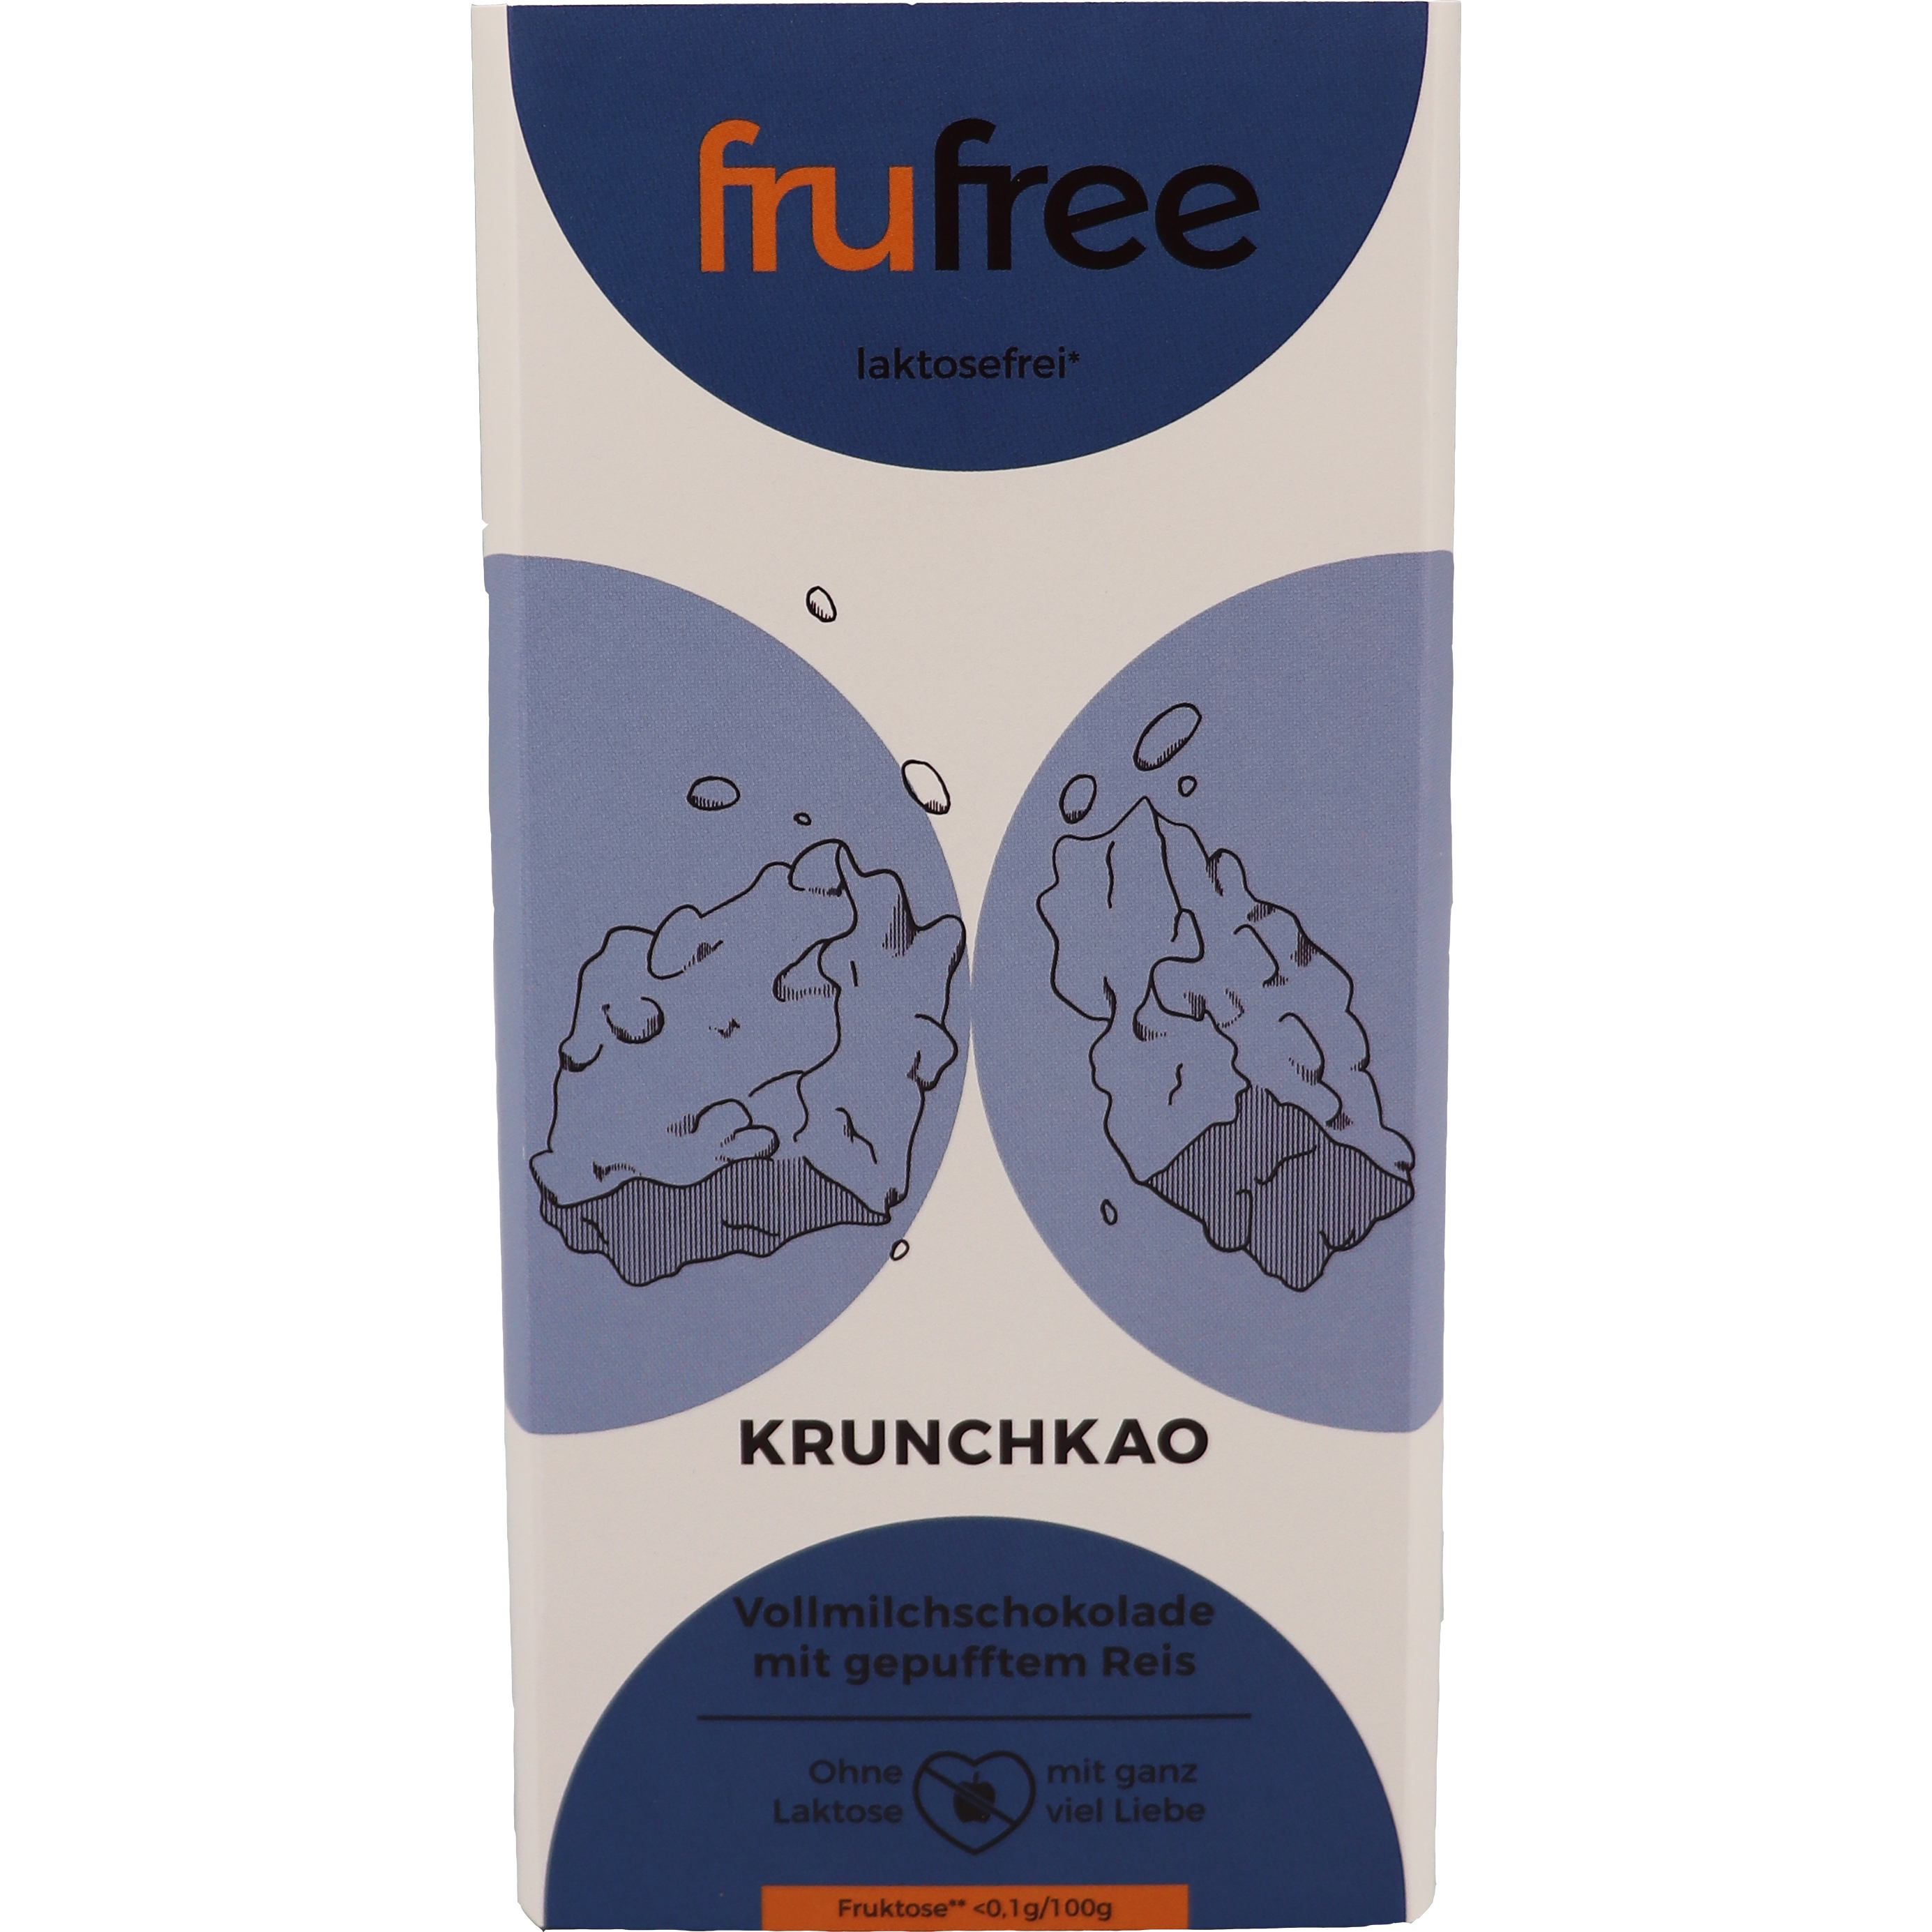 Krunchkao, edle Vollmilchschokolade mit gepufftem Reis - laktosefrei* 90g